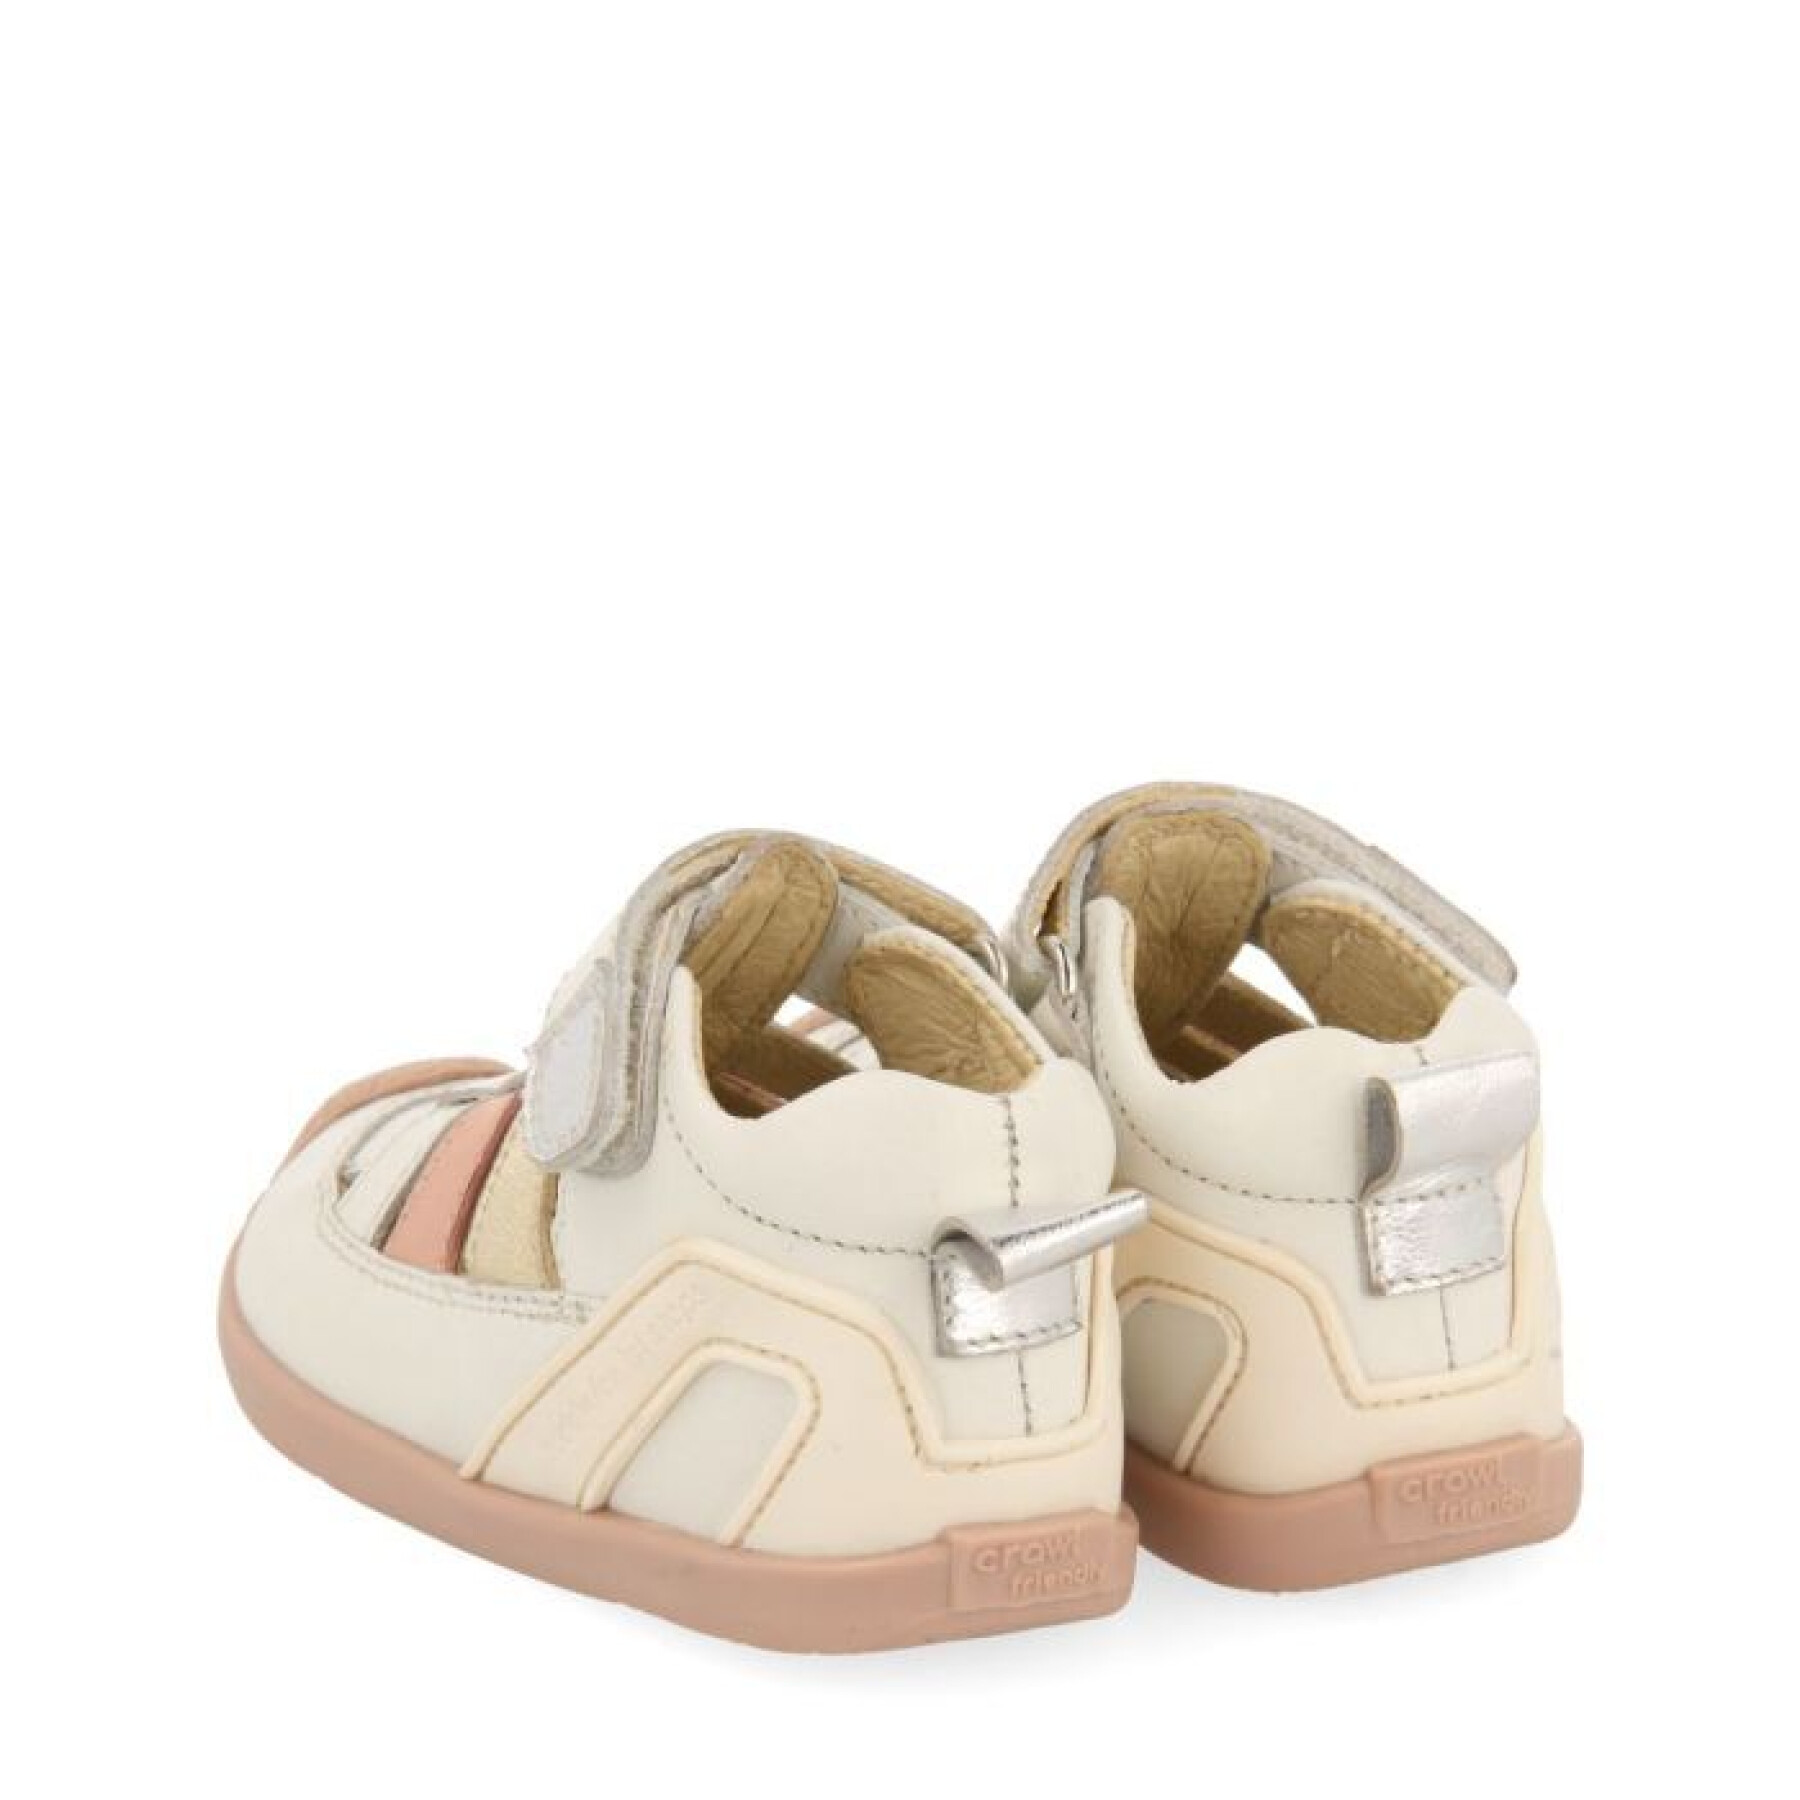 Baby sandals Gioseppo Sennen